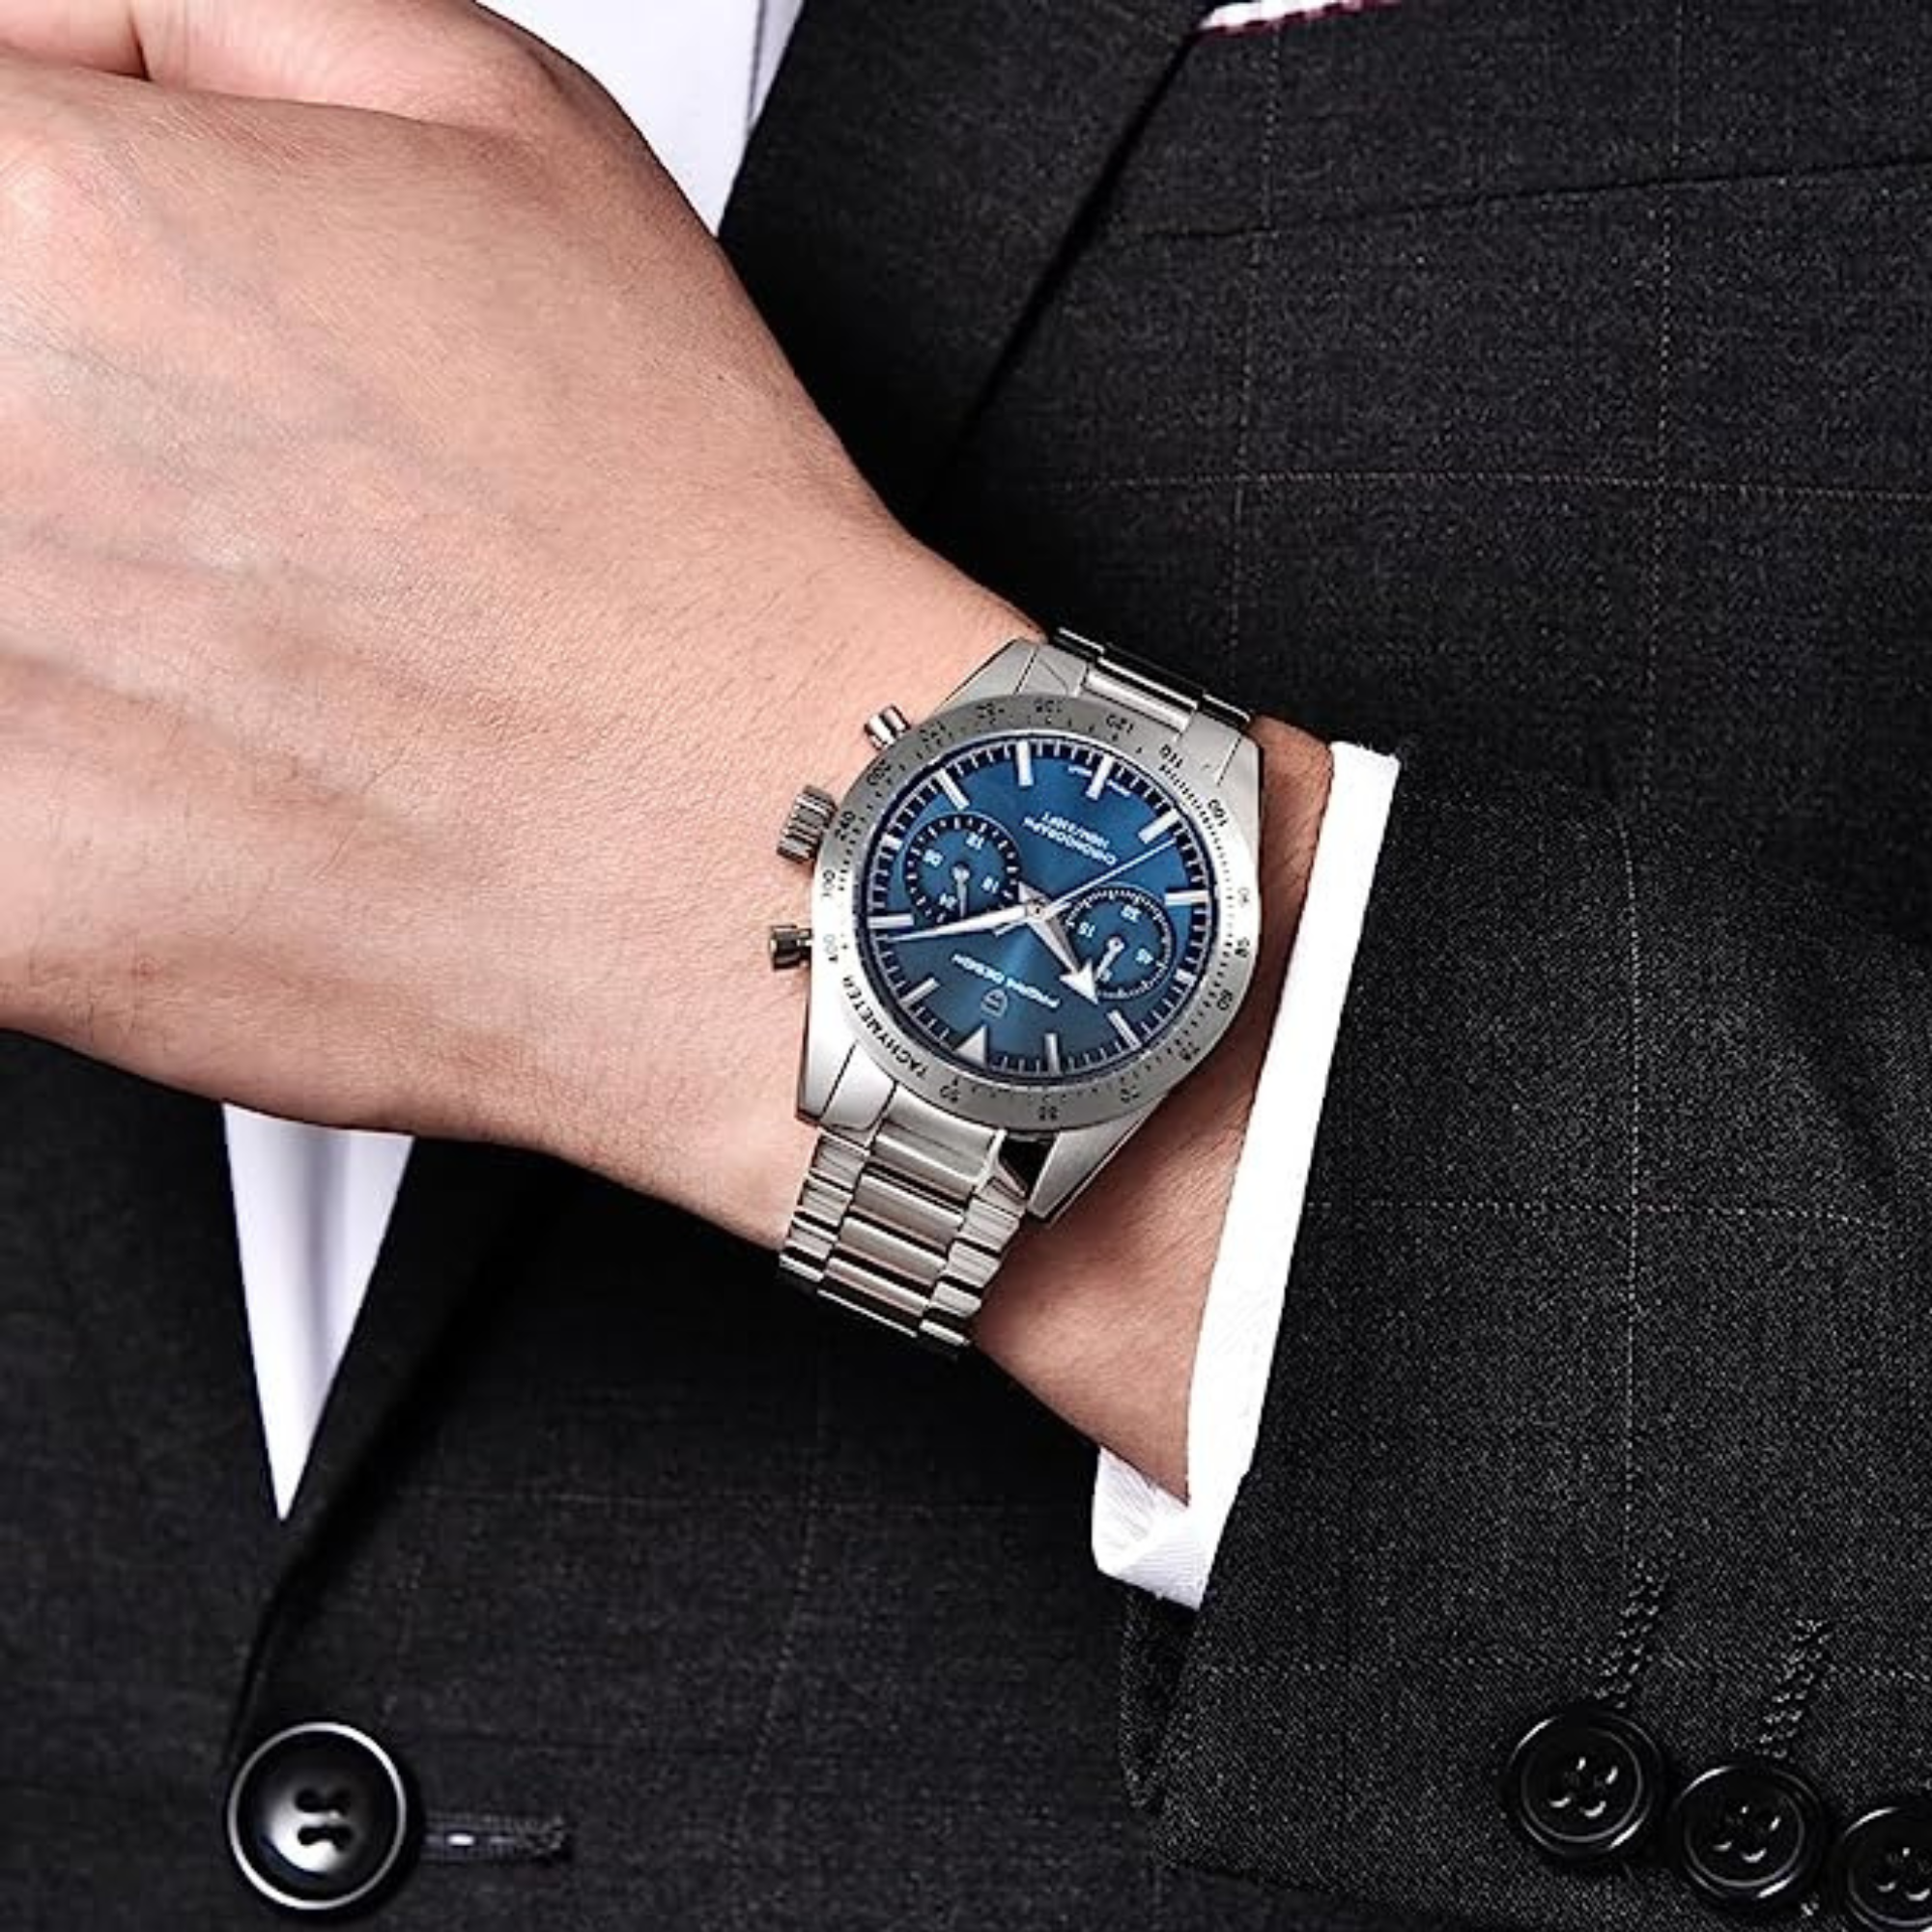 Pagani Design 1766 Homage Men's Chronograph Watches Stainless Steel 40mm Case VK64 Quartz Movement 100M Waterproof Casual Sport Retro Watch - Blue